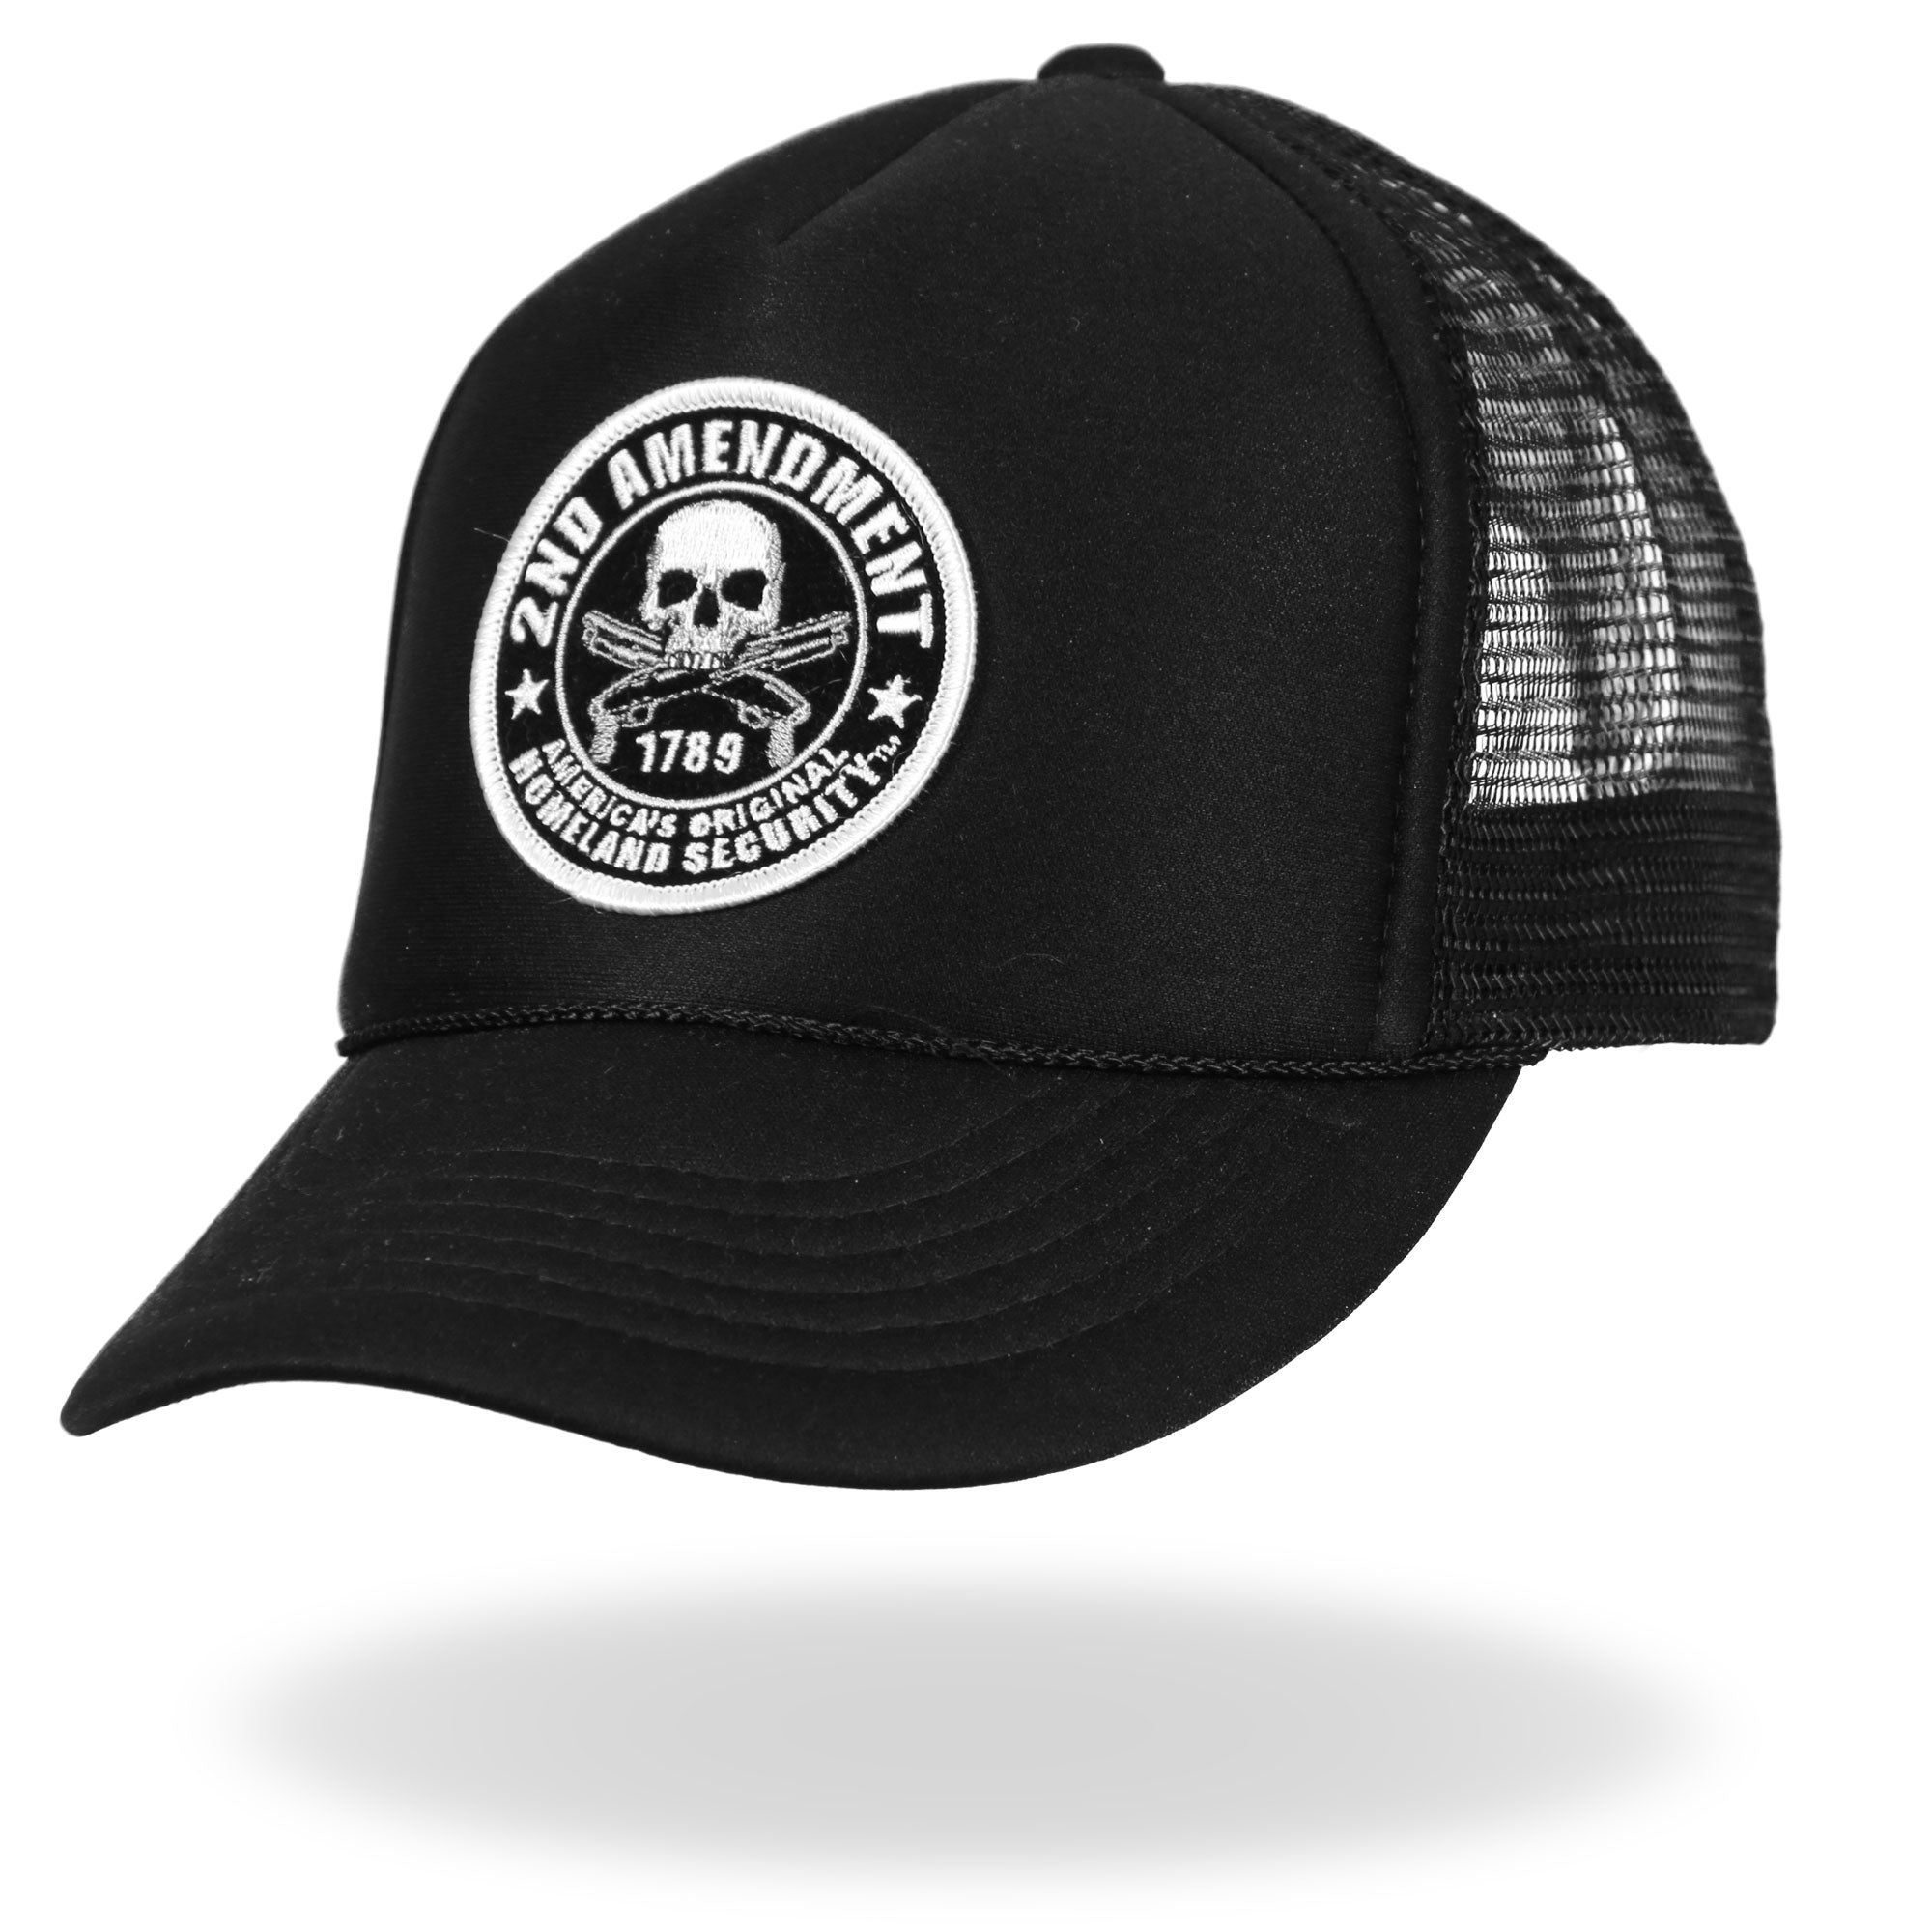 Hot Leathers GSH1005 2nd Amendment America's Original Homeland Security Trucker Hat